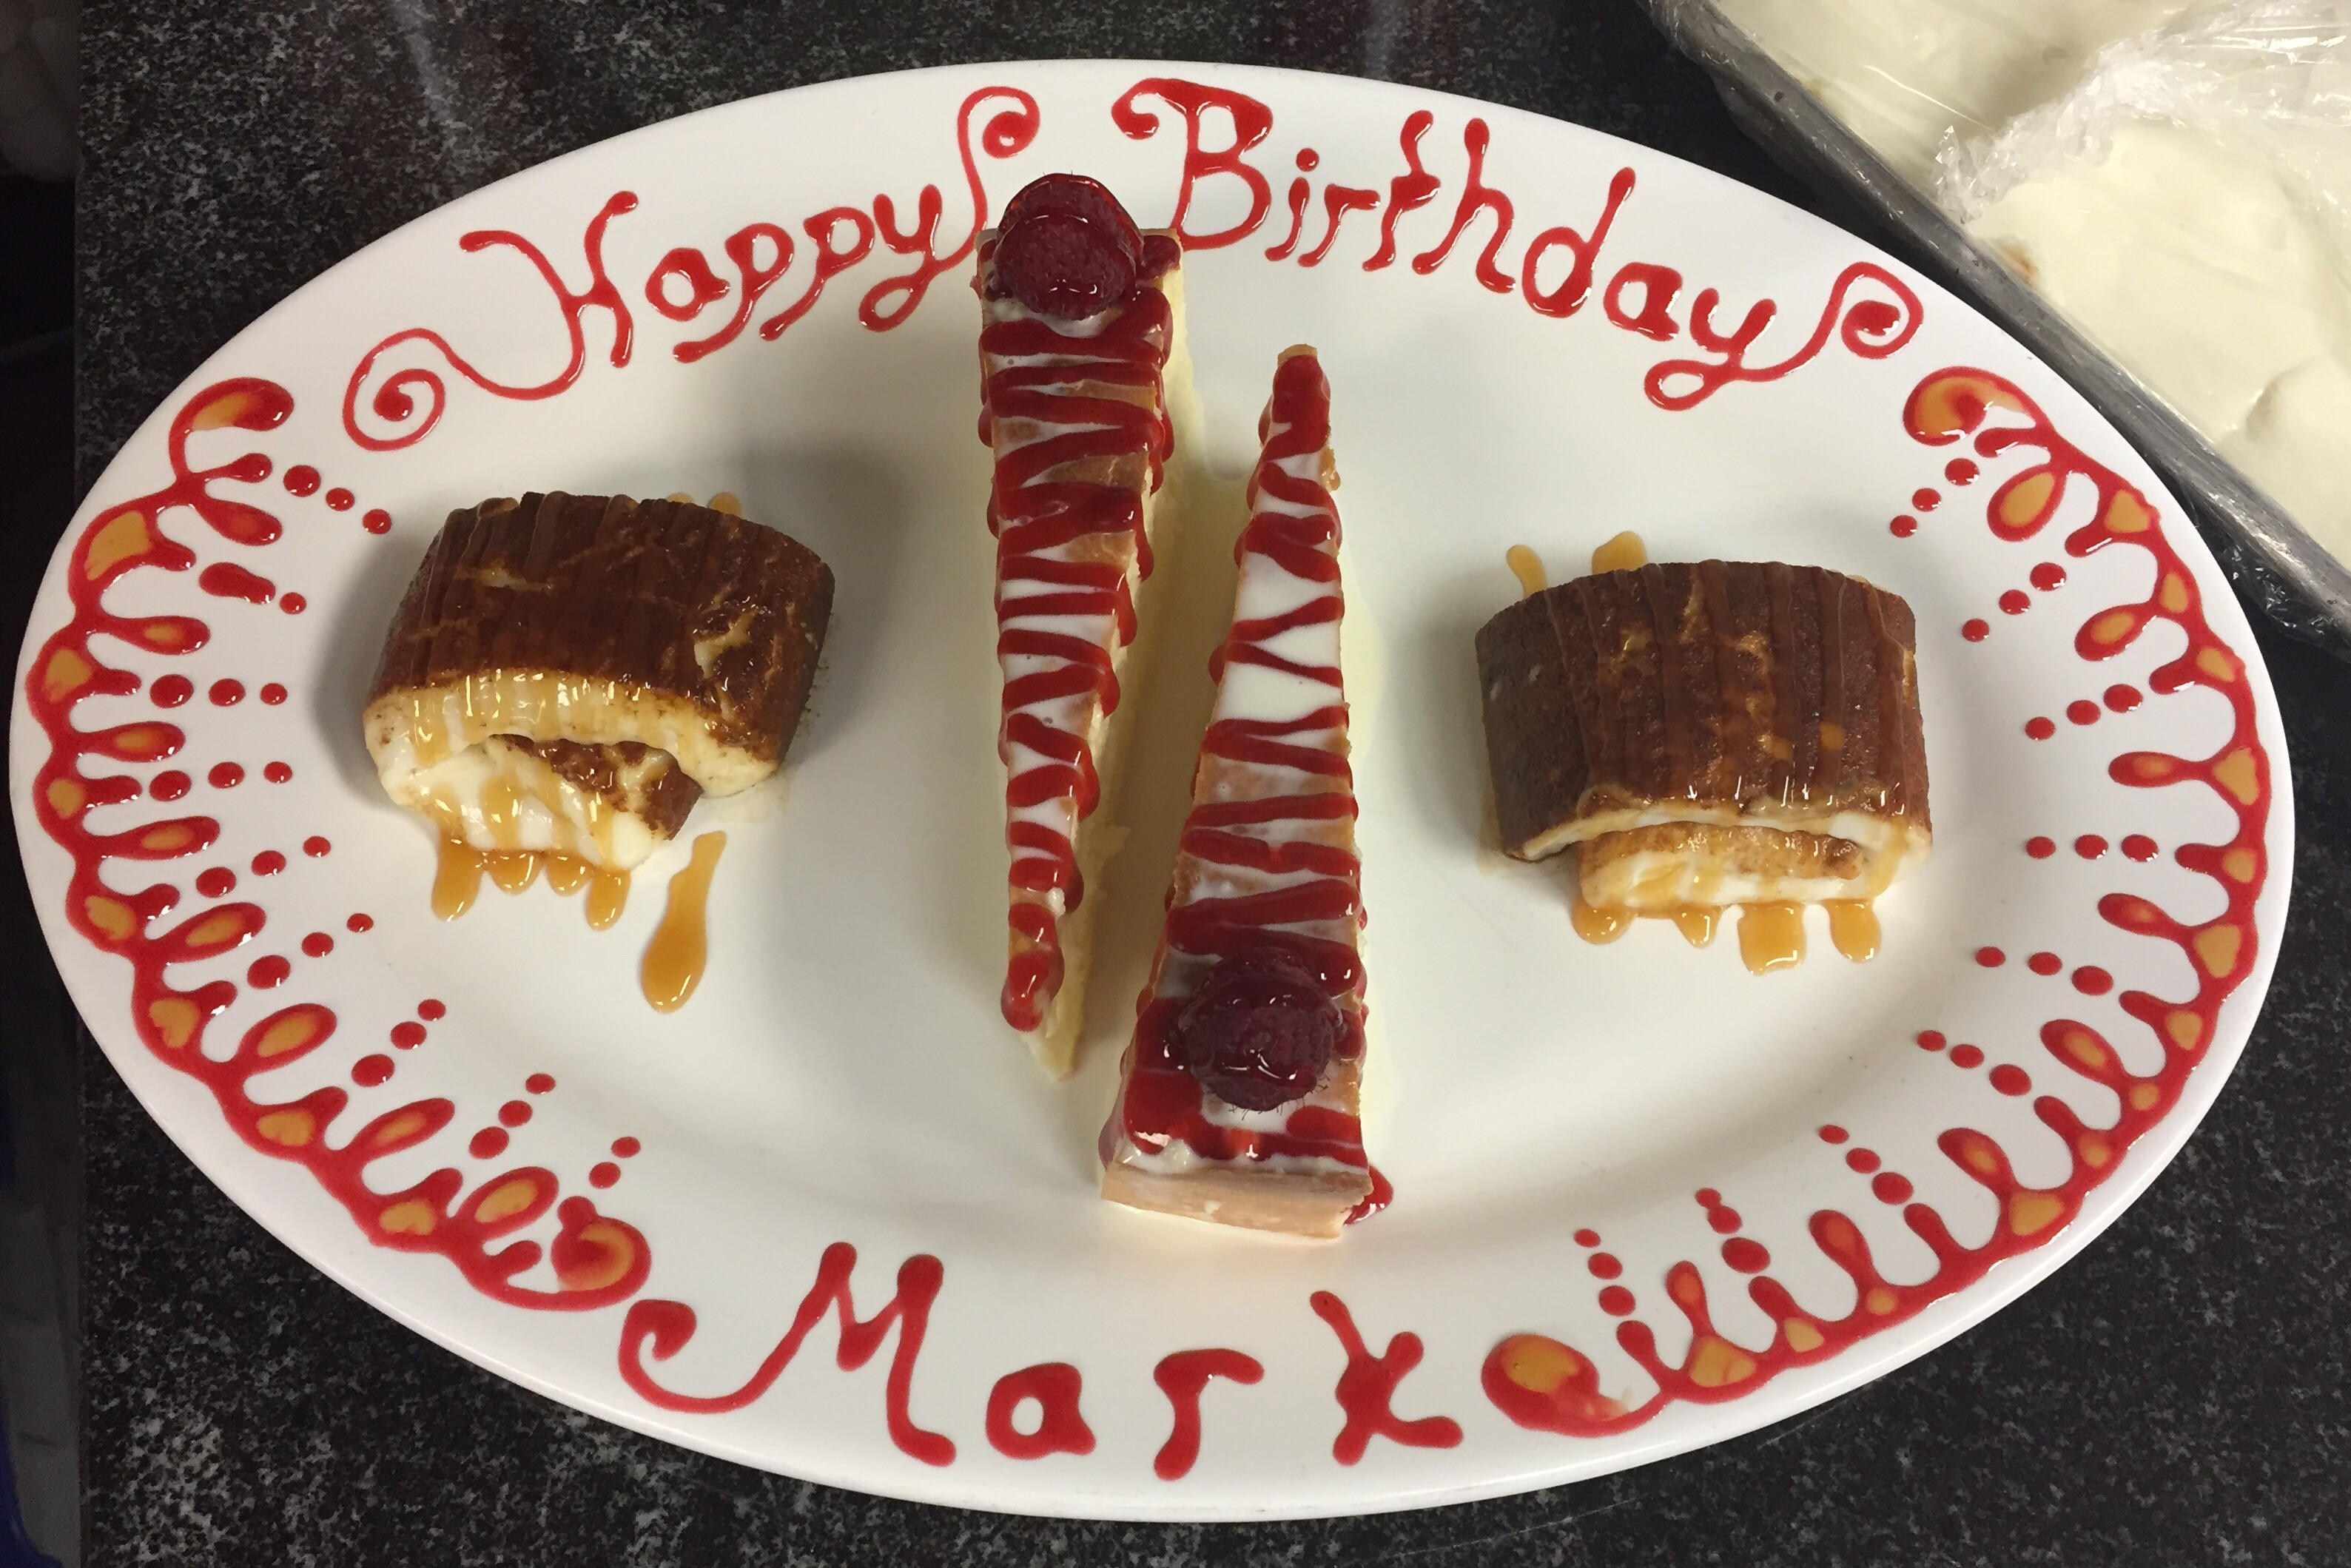 Best ideas about Happy Birthday Mark Cake
. Save or Pin Happy Birthday Mark Cake – Brithday Cake Now.